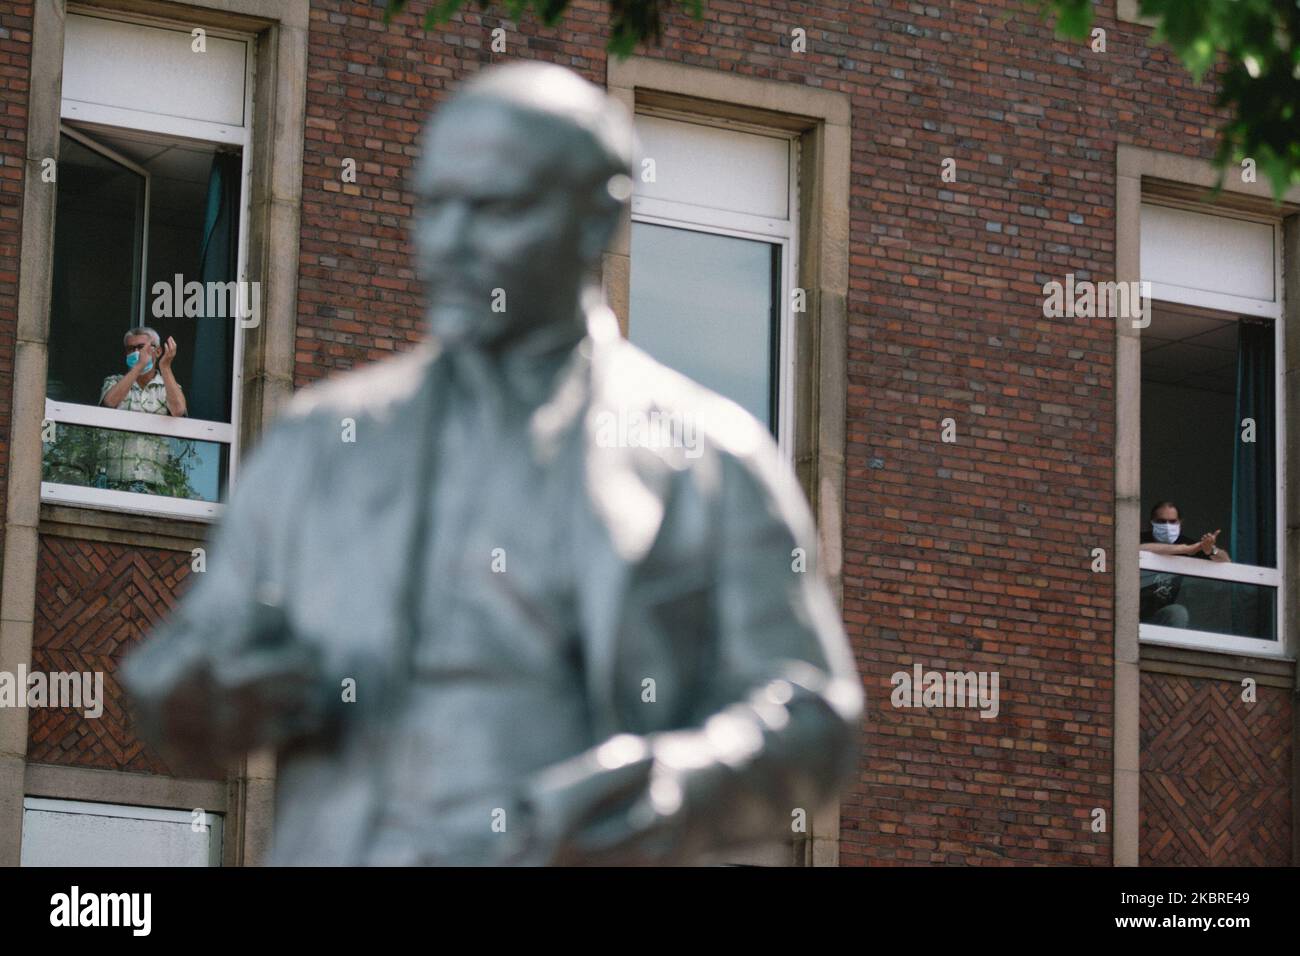 La statua di Lenin è vista a Gelsenkrichen. (Foto di Ying Tang/NurPhoto) Foto Stock